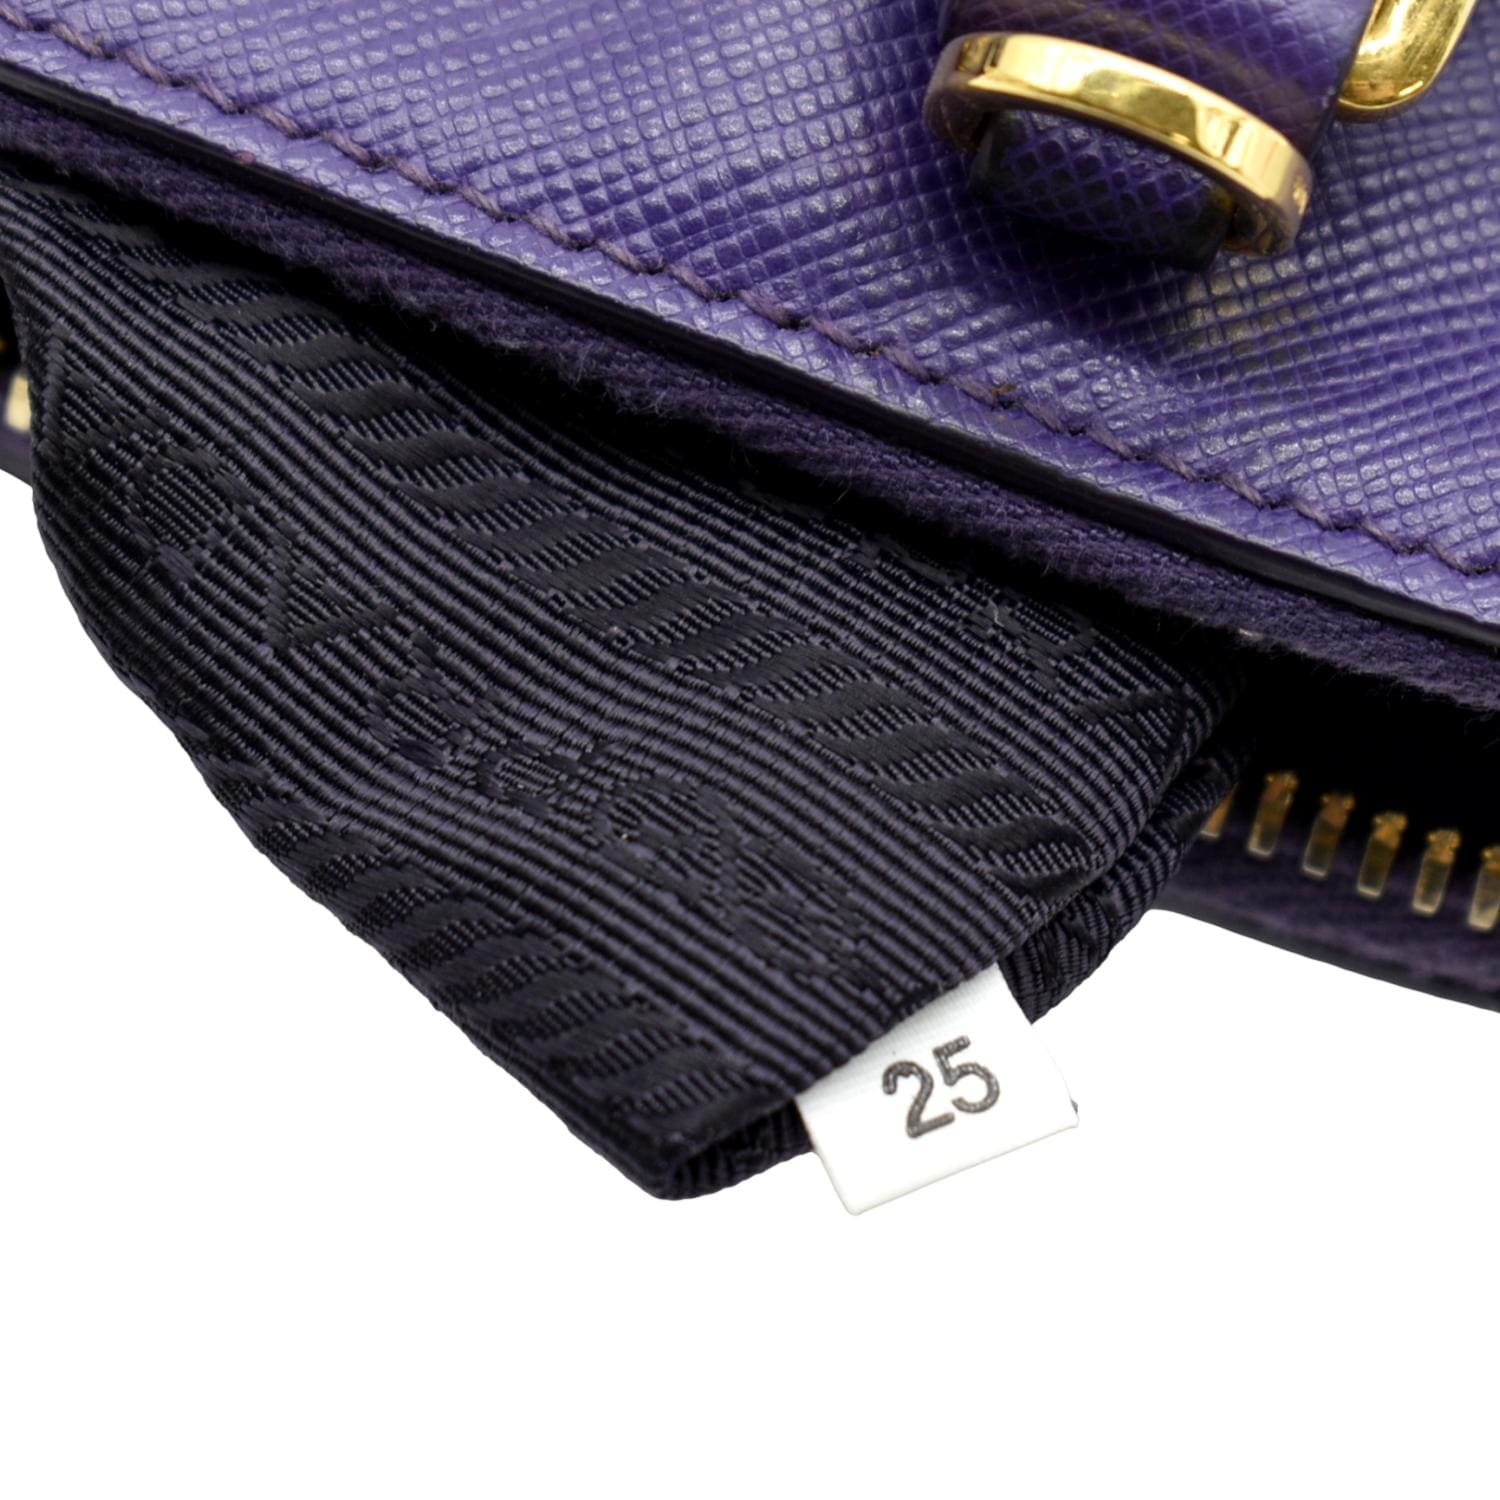 PRADA Lux Medium Promenade Saffiano Leather Shoulder Bag Nero BL0837